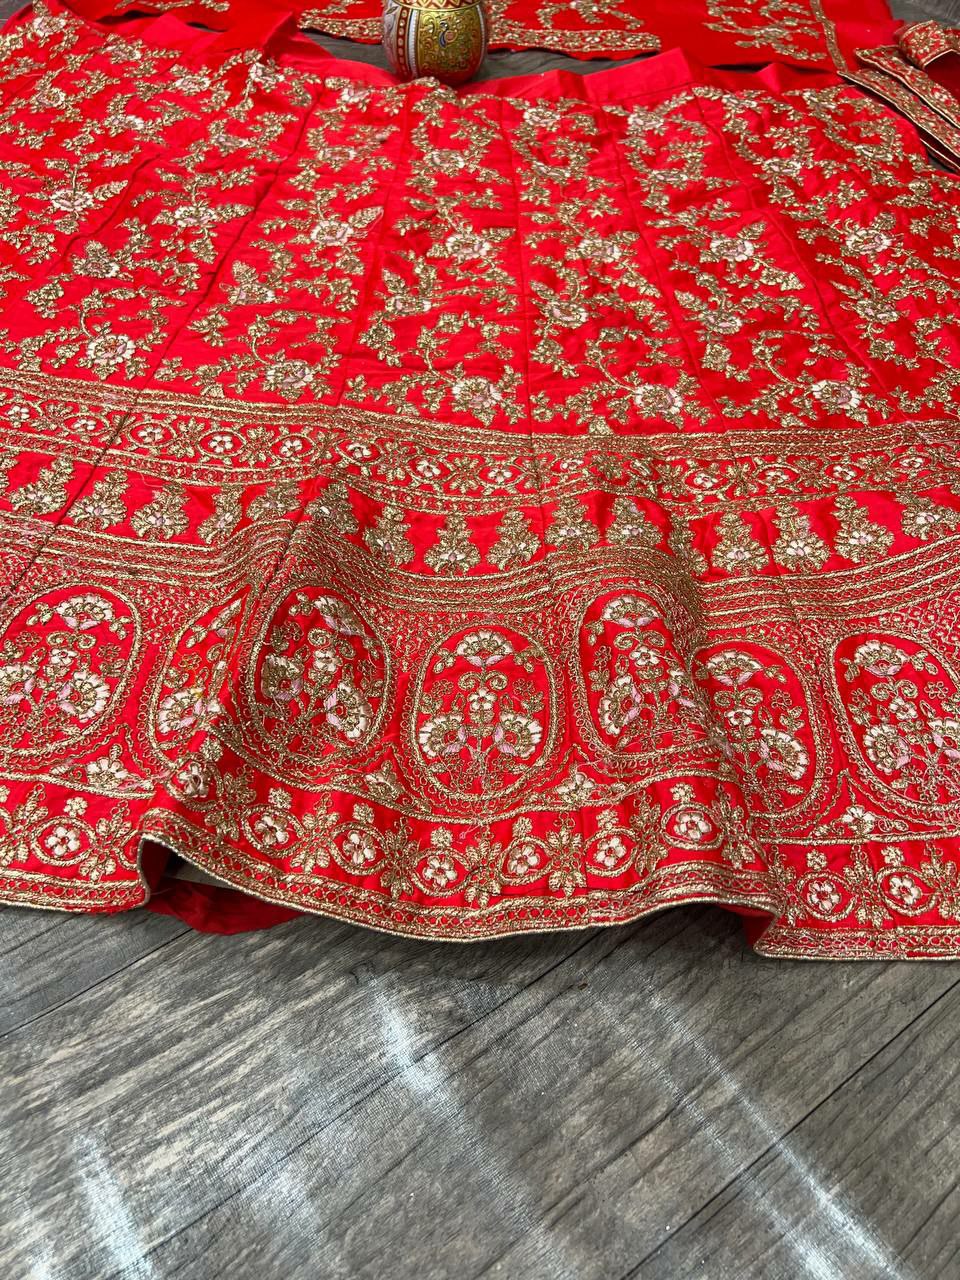 Red Ethnic Lehenga Choli With Blouse For Wedding wear